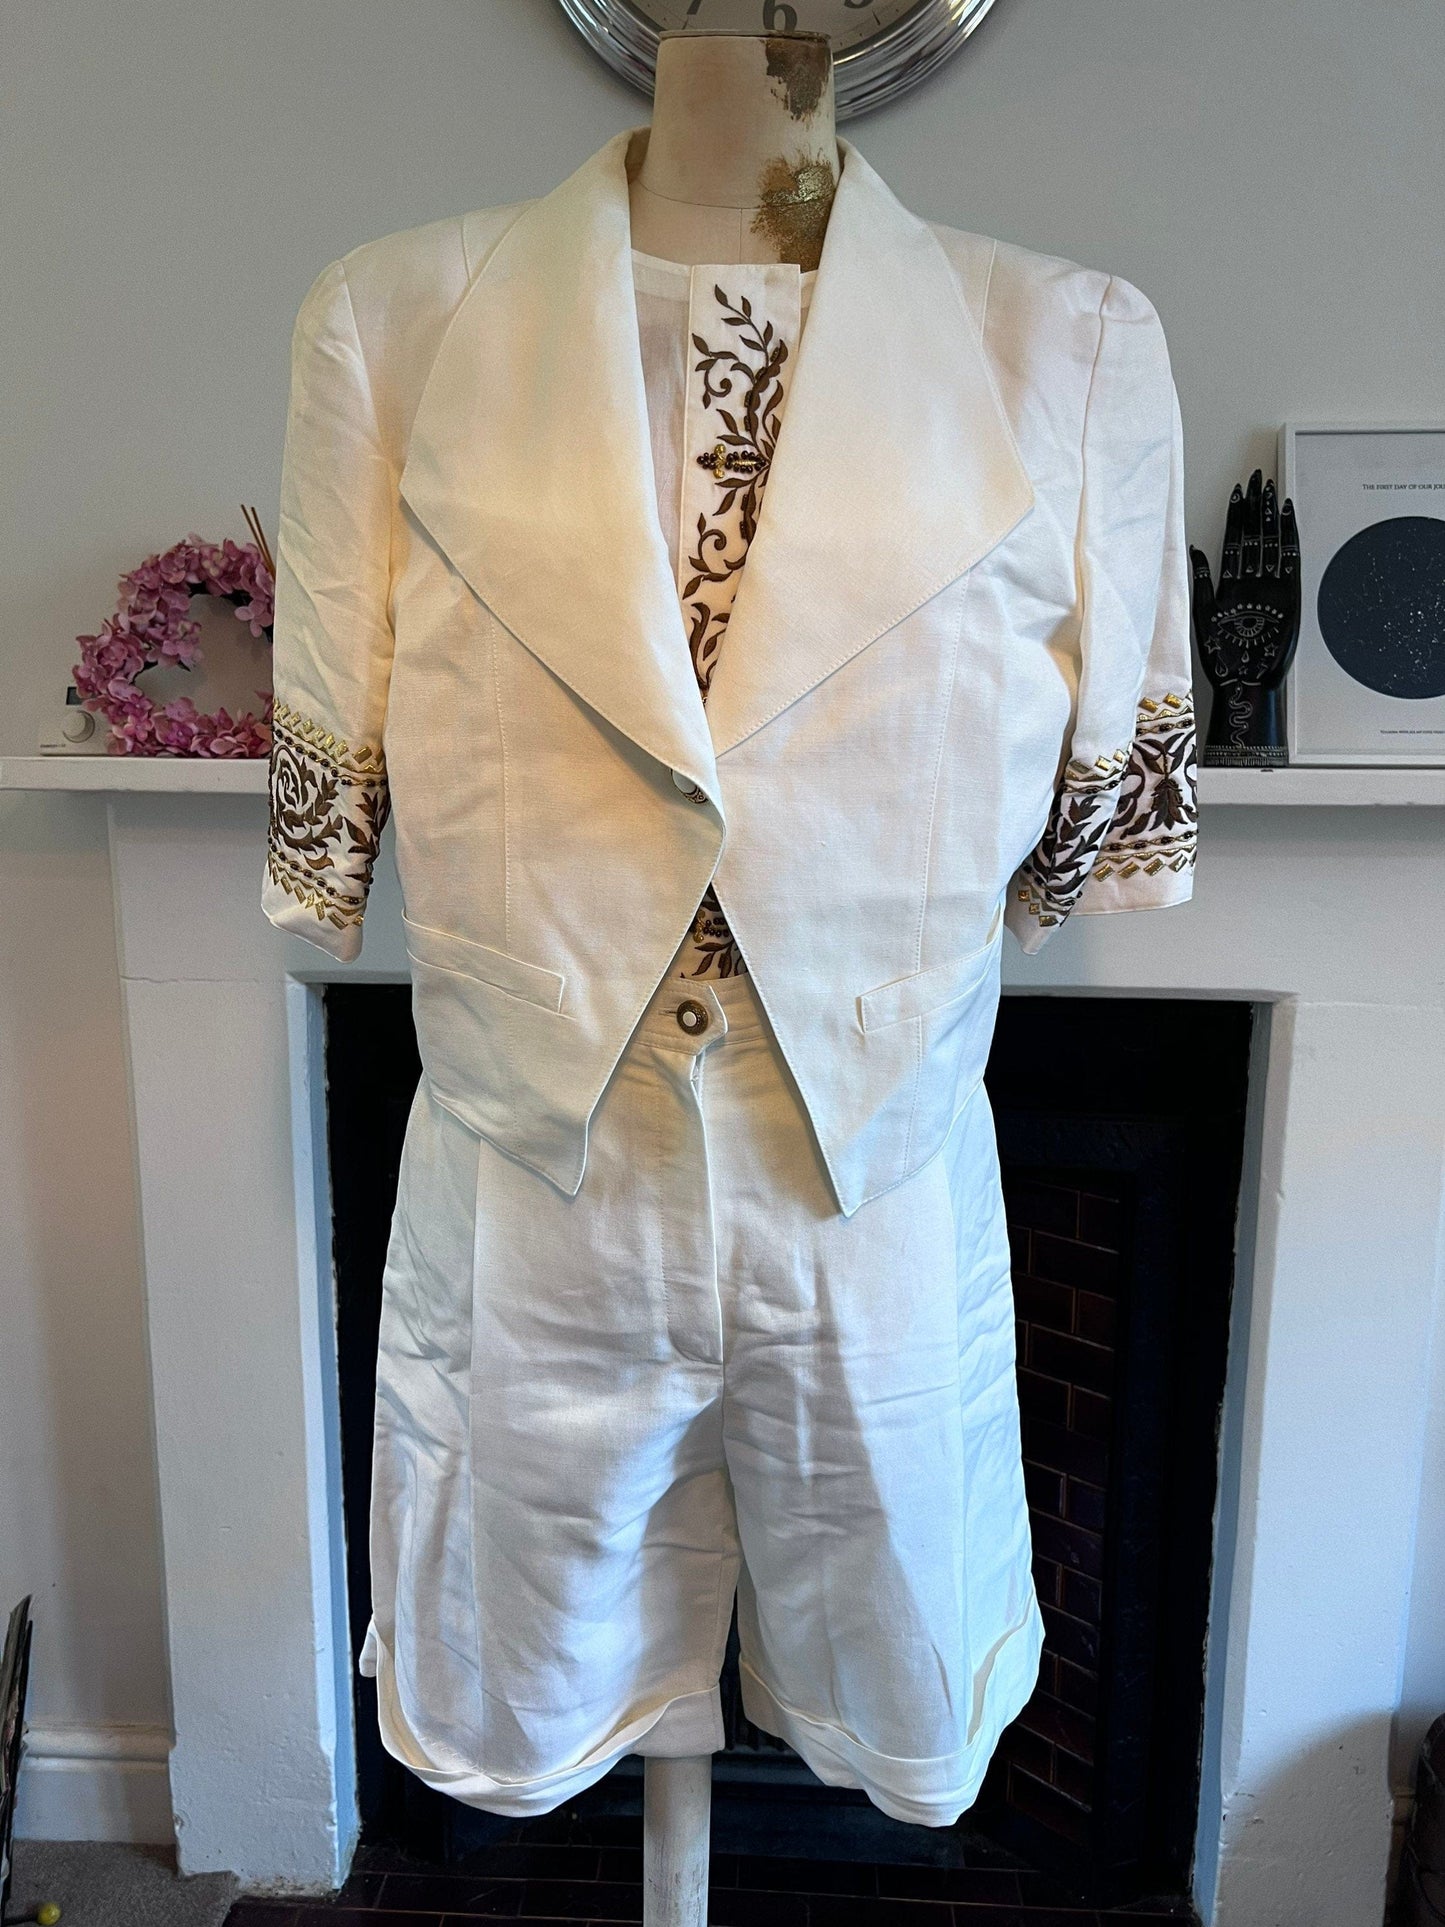 Vintage Suit Three Piece Suit Linen Cream 1980s Shorts Blouse and Jacket Suit - West German - Unworn Suit Still Tagged ! Brand New Vintage